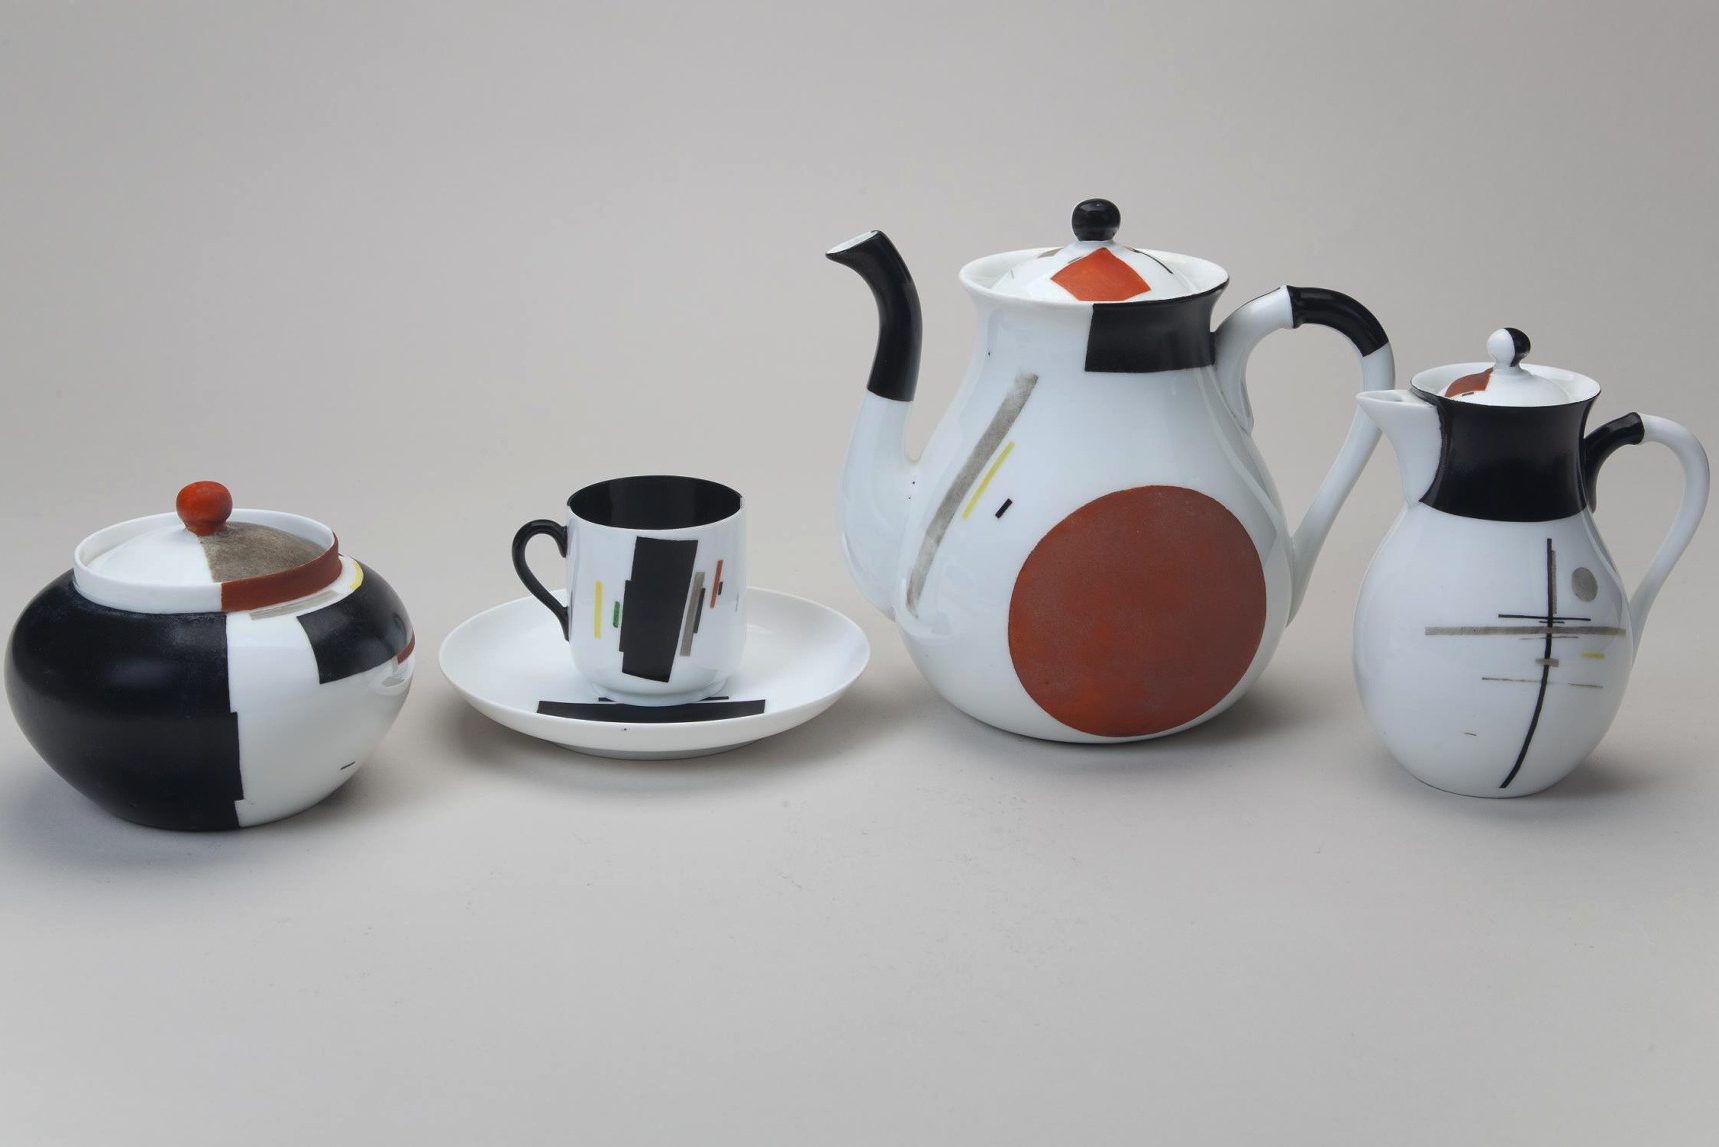 Soviet porcelain tea set "Terracotta Figures". Suprematism. Nikolai Suetin. Lomonosov State Porcelain factory, St Petersburg, USSR. 1923